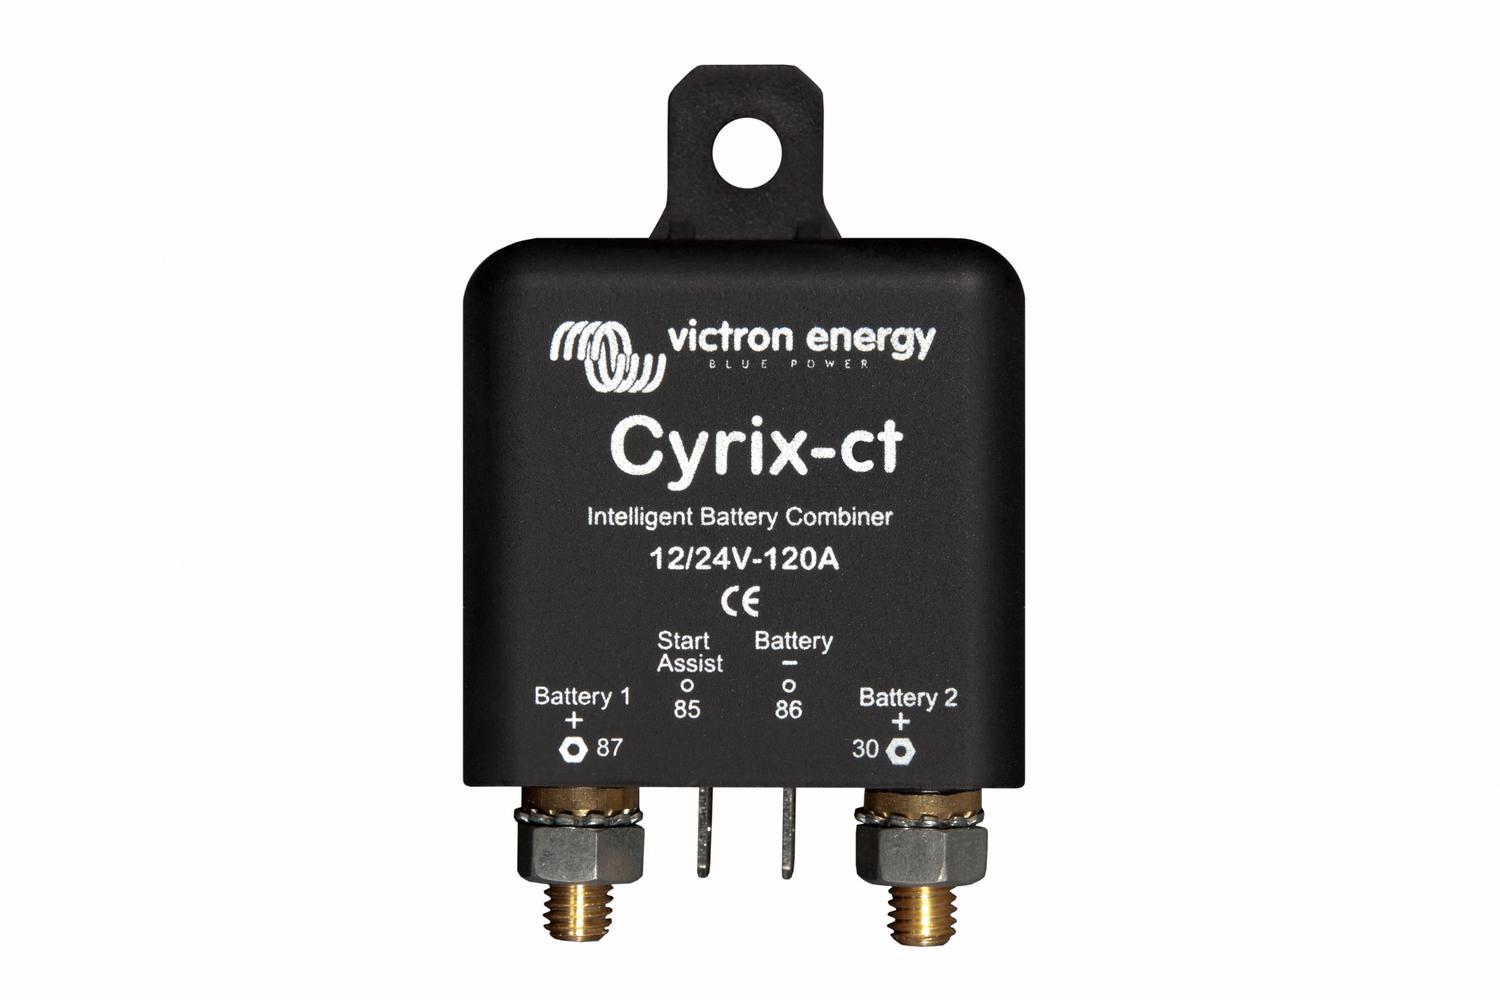 Cyrix-ct 12/24V-120A intelligent combiner - 46x46x80 - gewicht 0.11kg